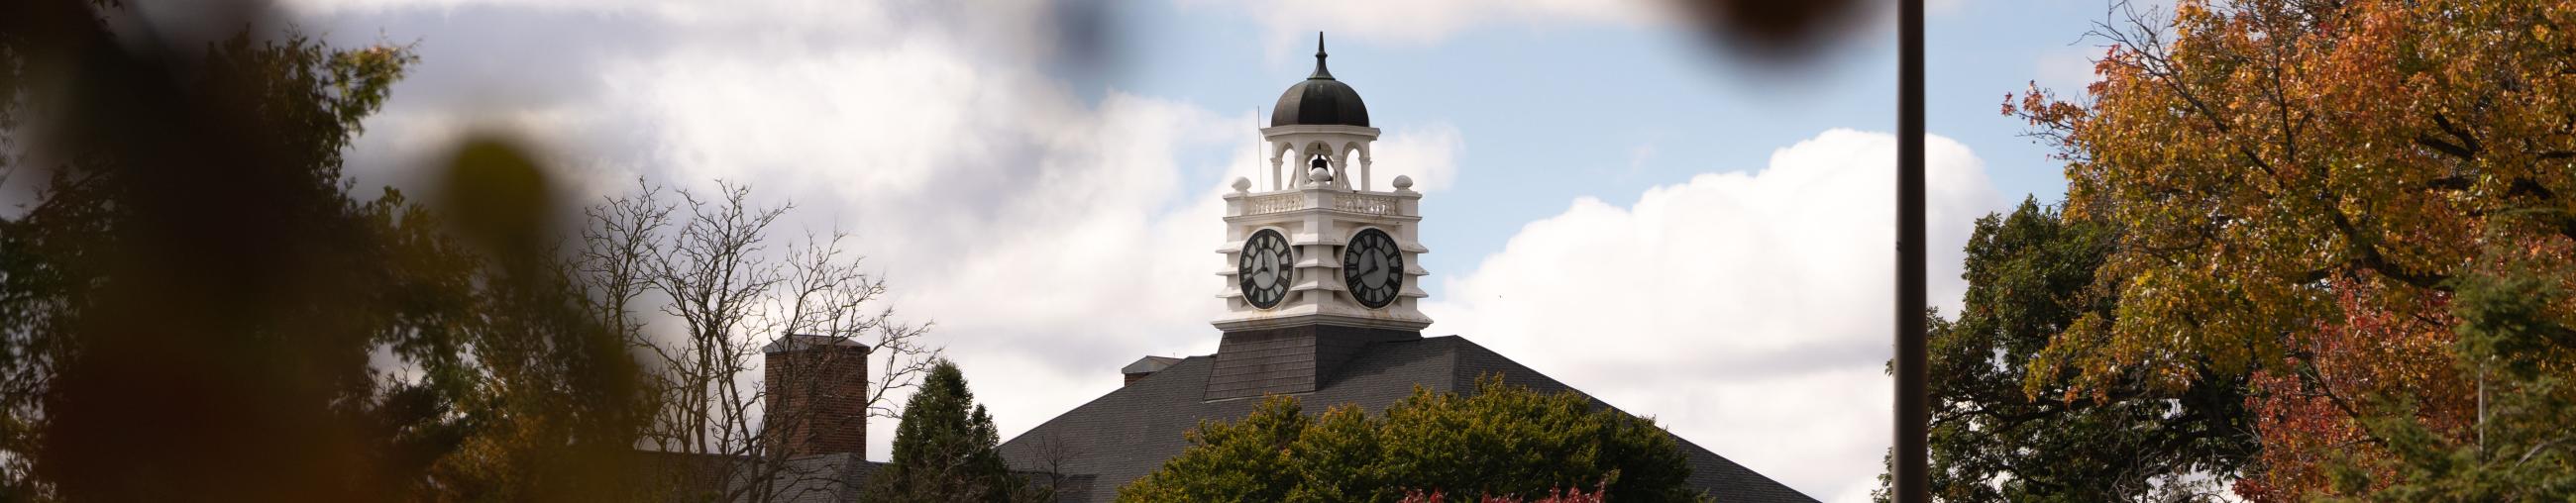 clocktower at Danville Area Community College